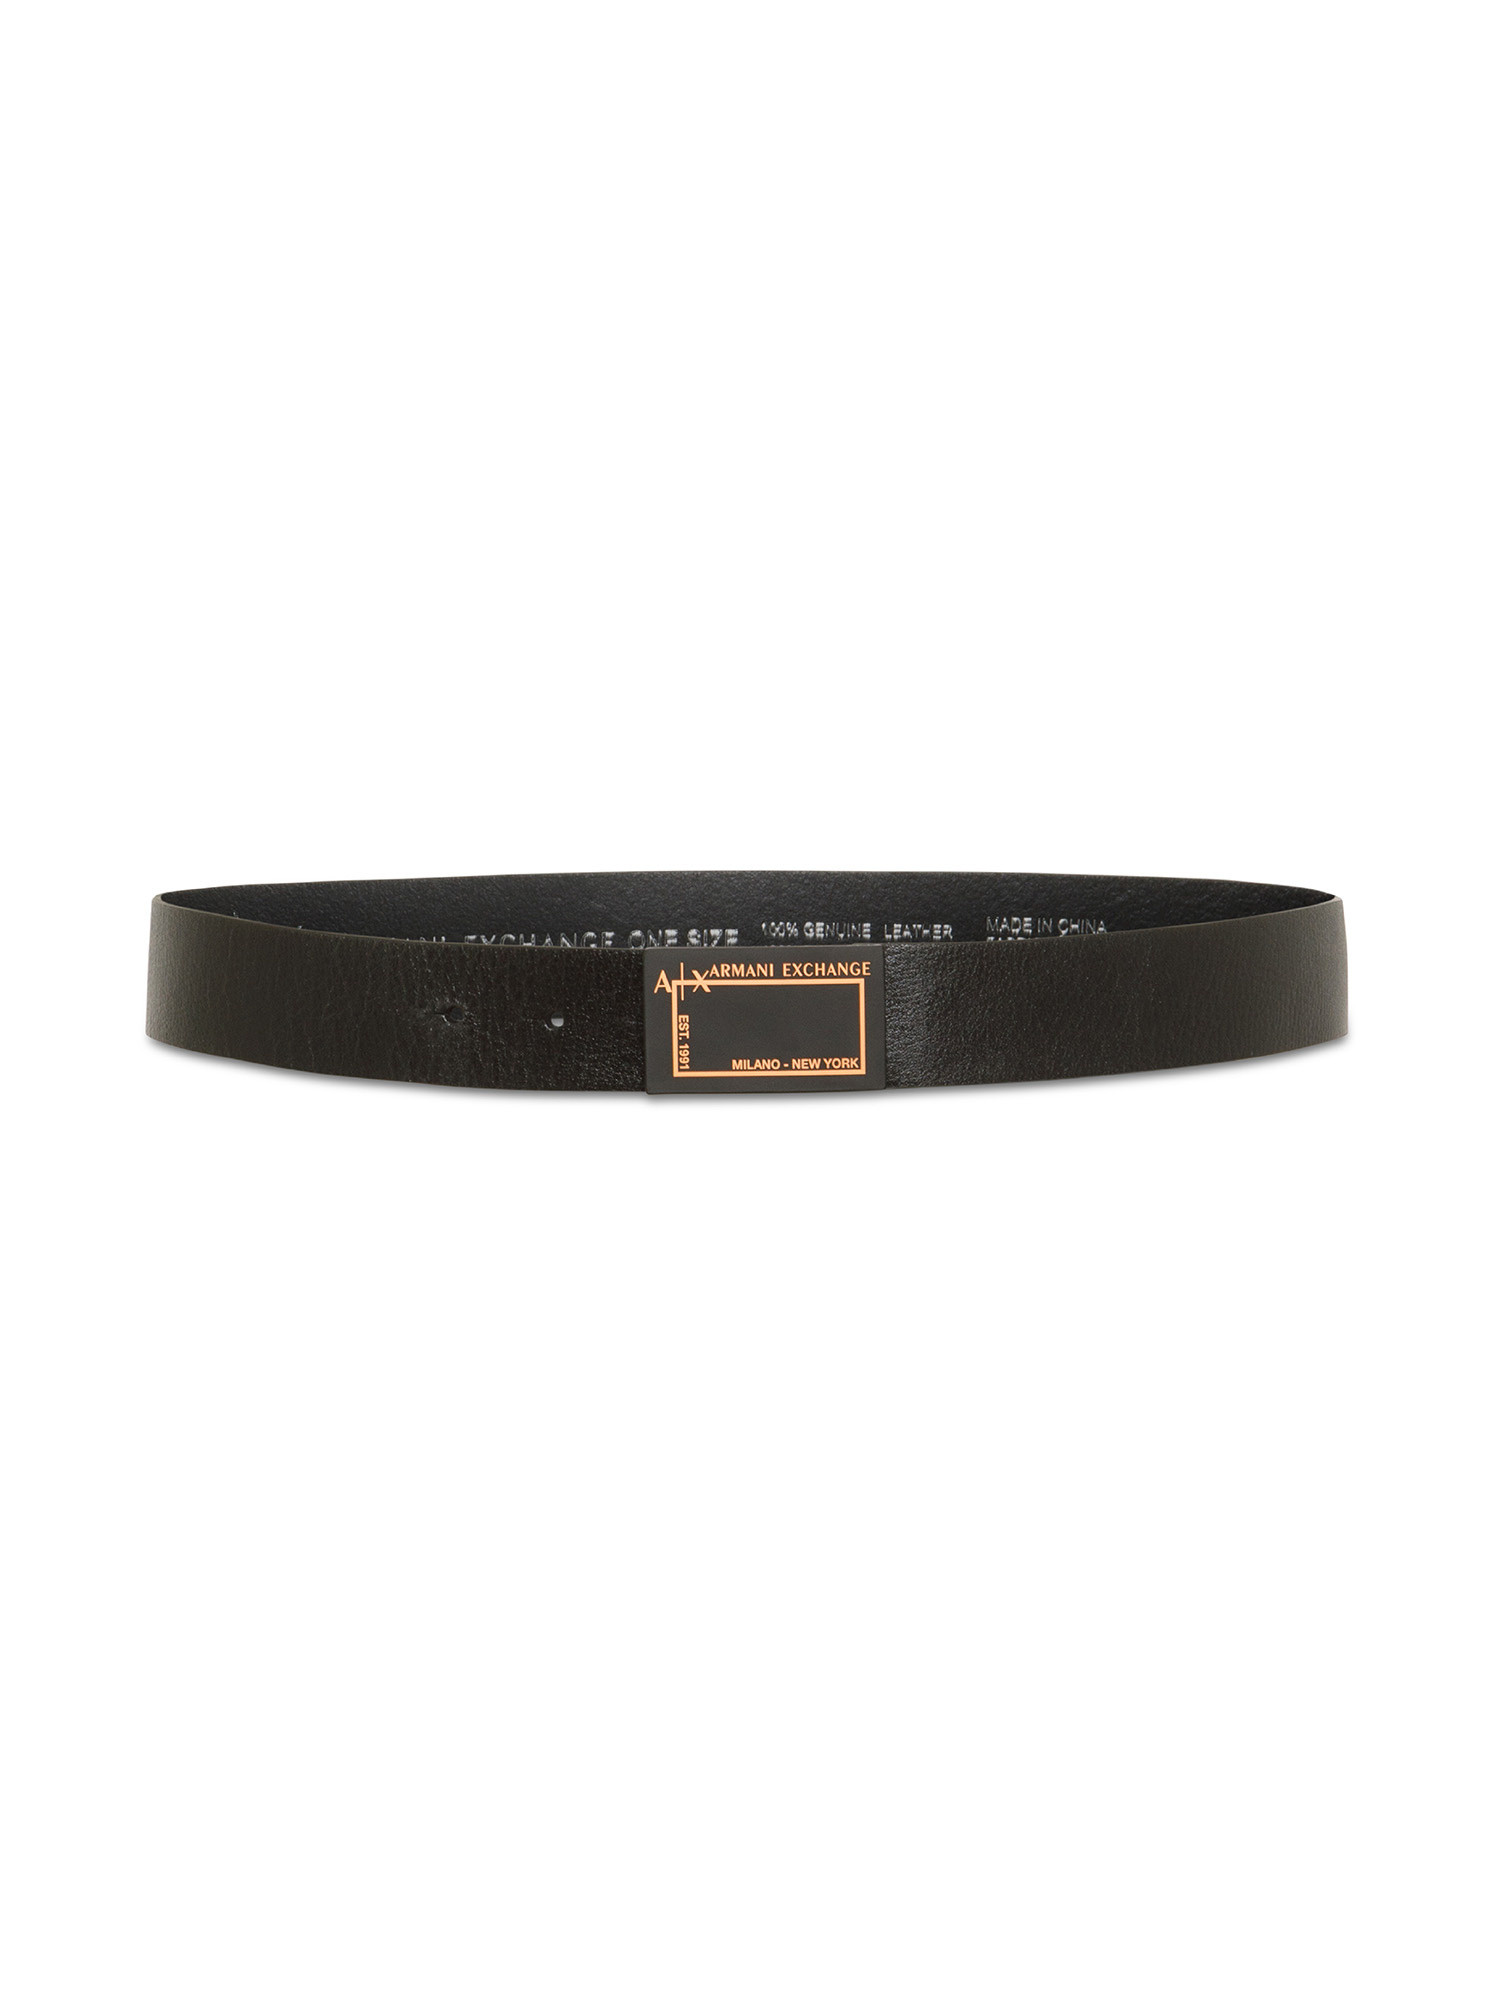 Armani Exchange - Leather belt with logoed buckle, Black, large image number 1